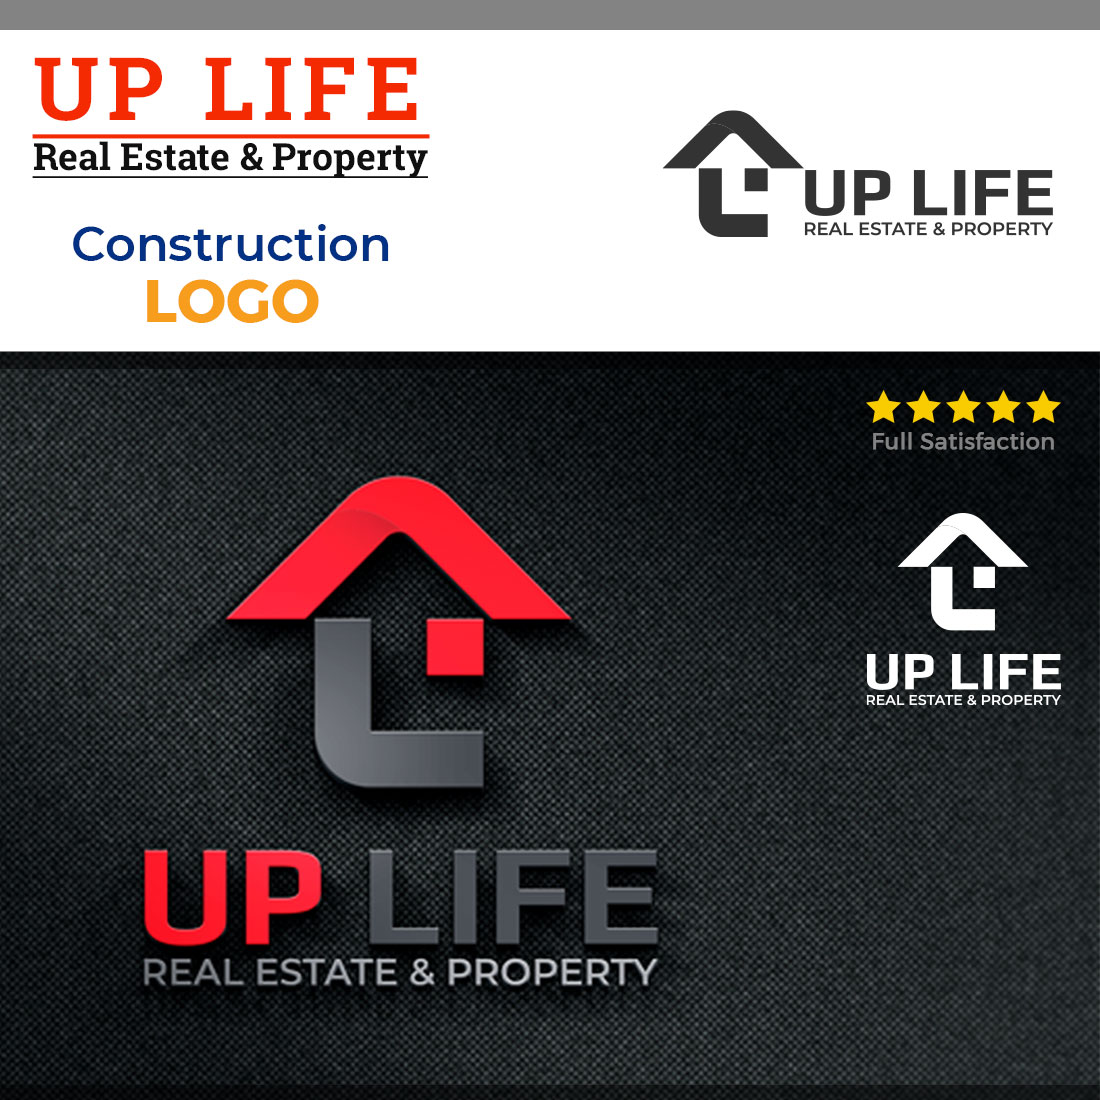 Real Estate Company Logo - main image preview.